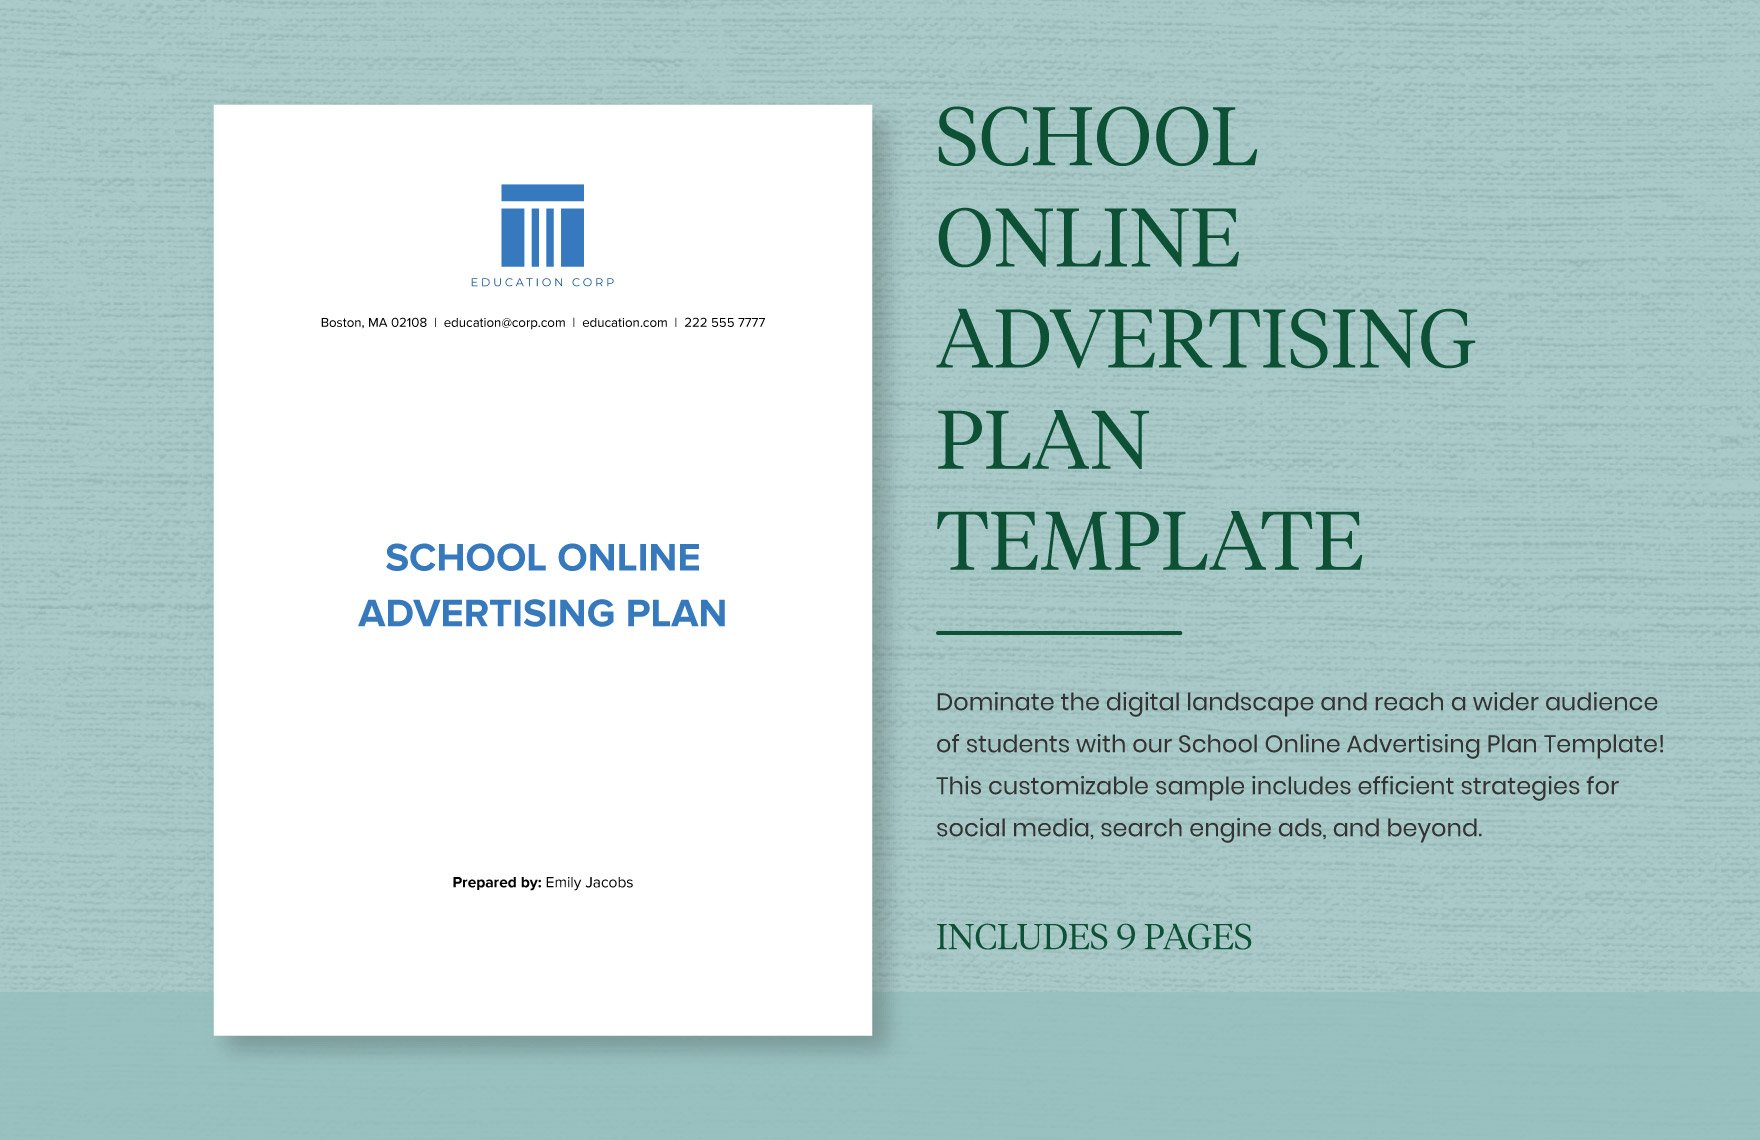 School Online Advertising Plan Template